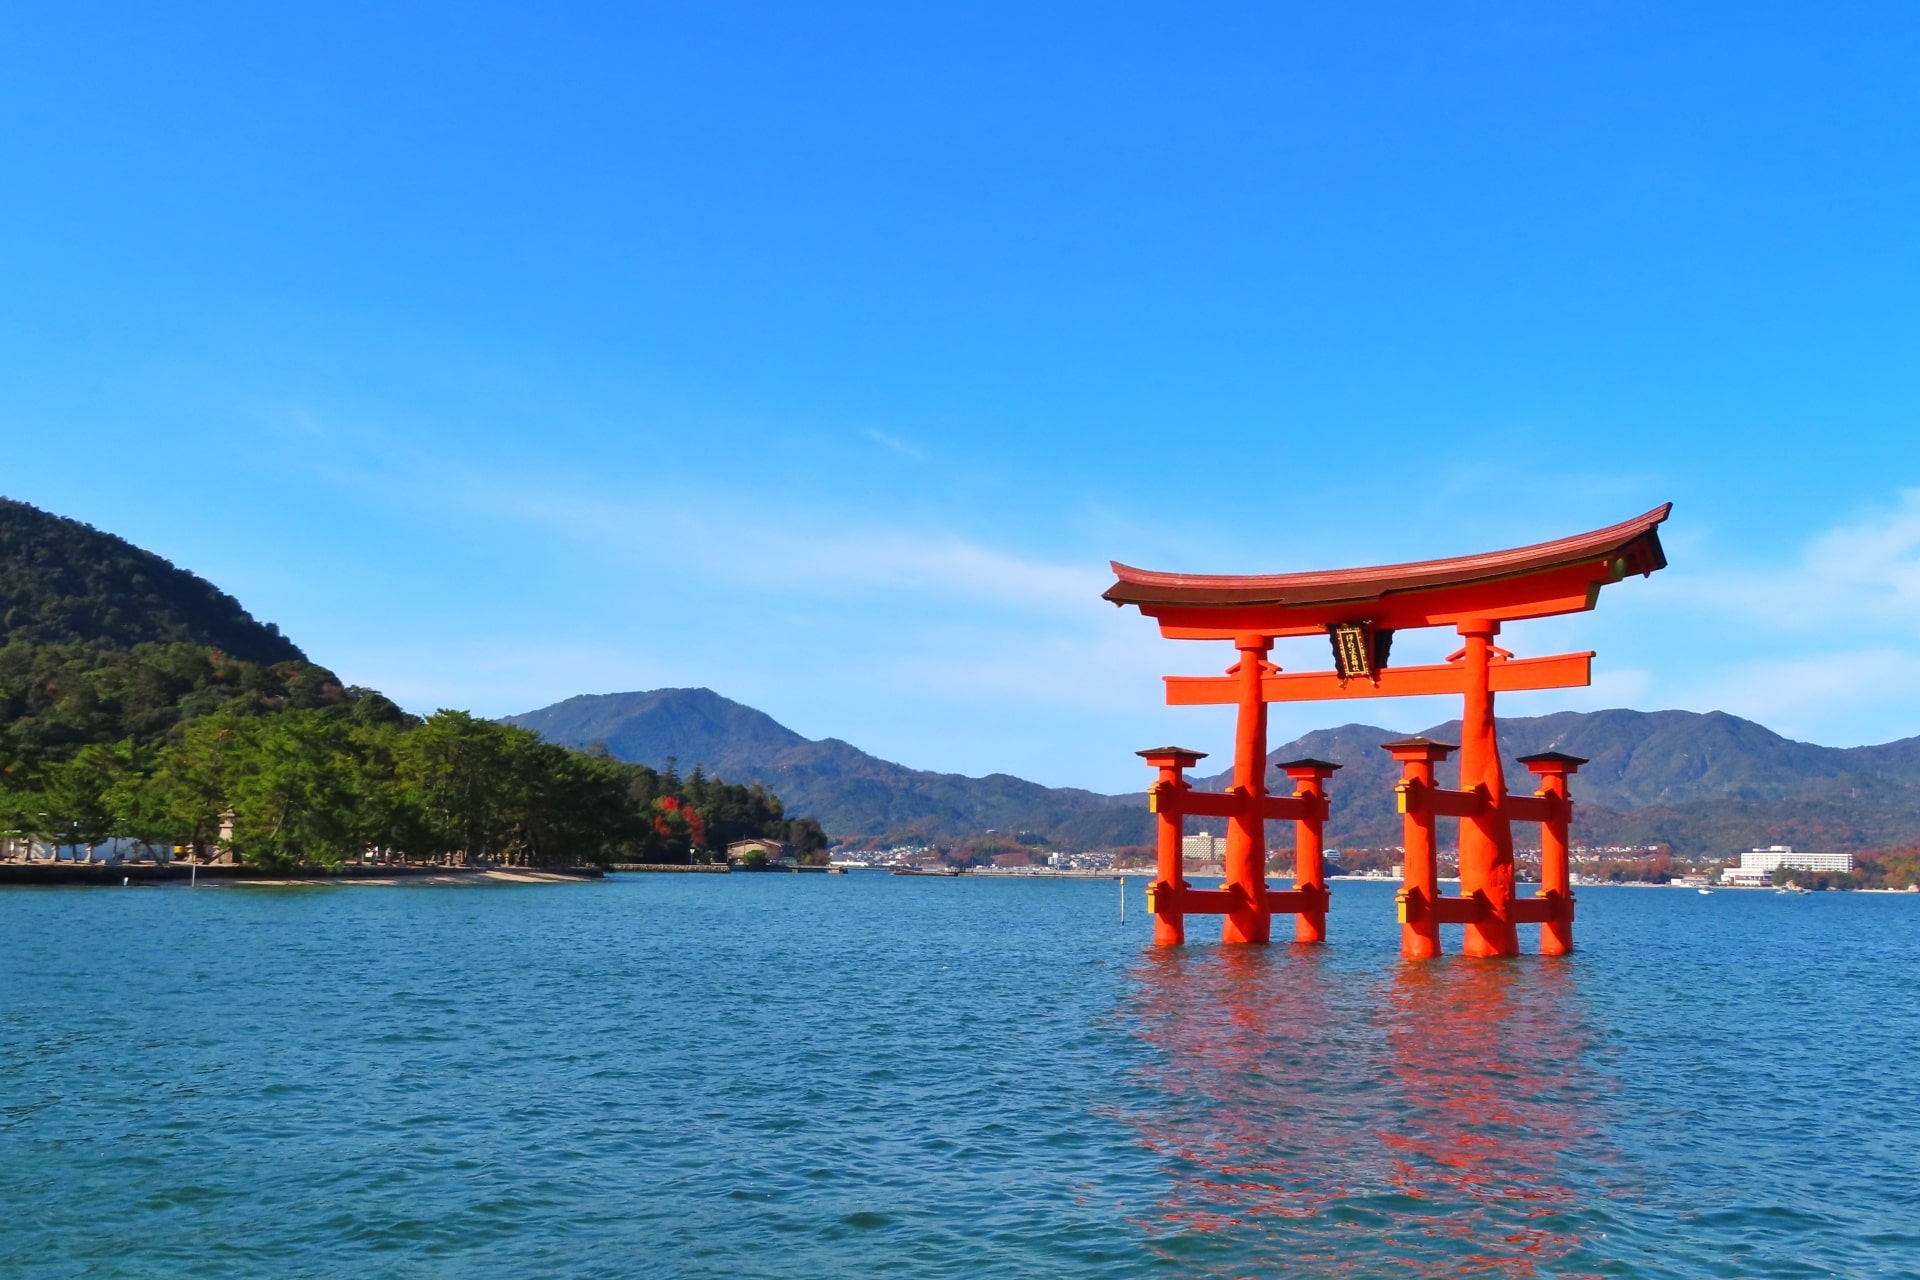 Miyajima/Itsukushima Shrine (Hiroshima)